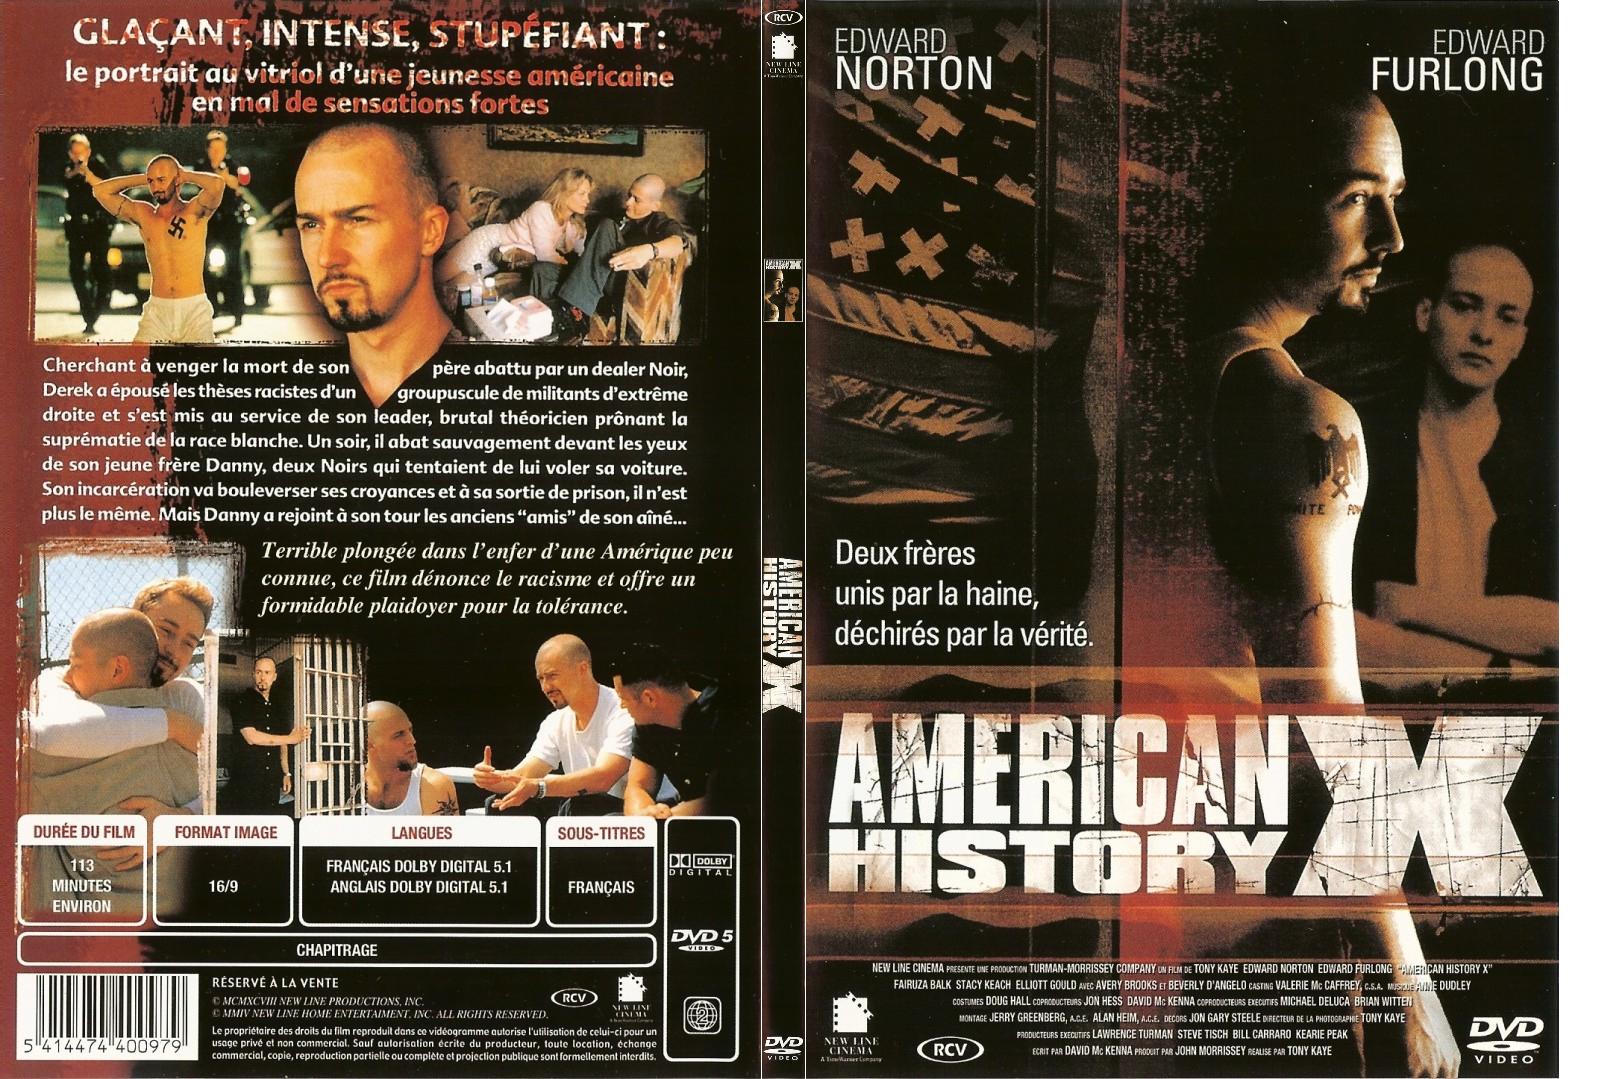 Jaquette DVD American History X - SLIM